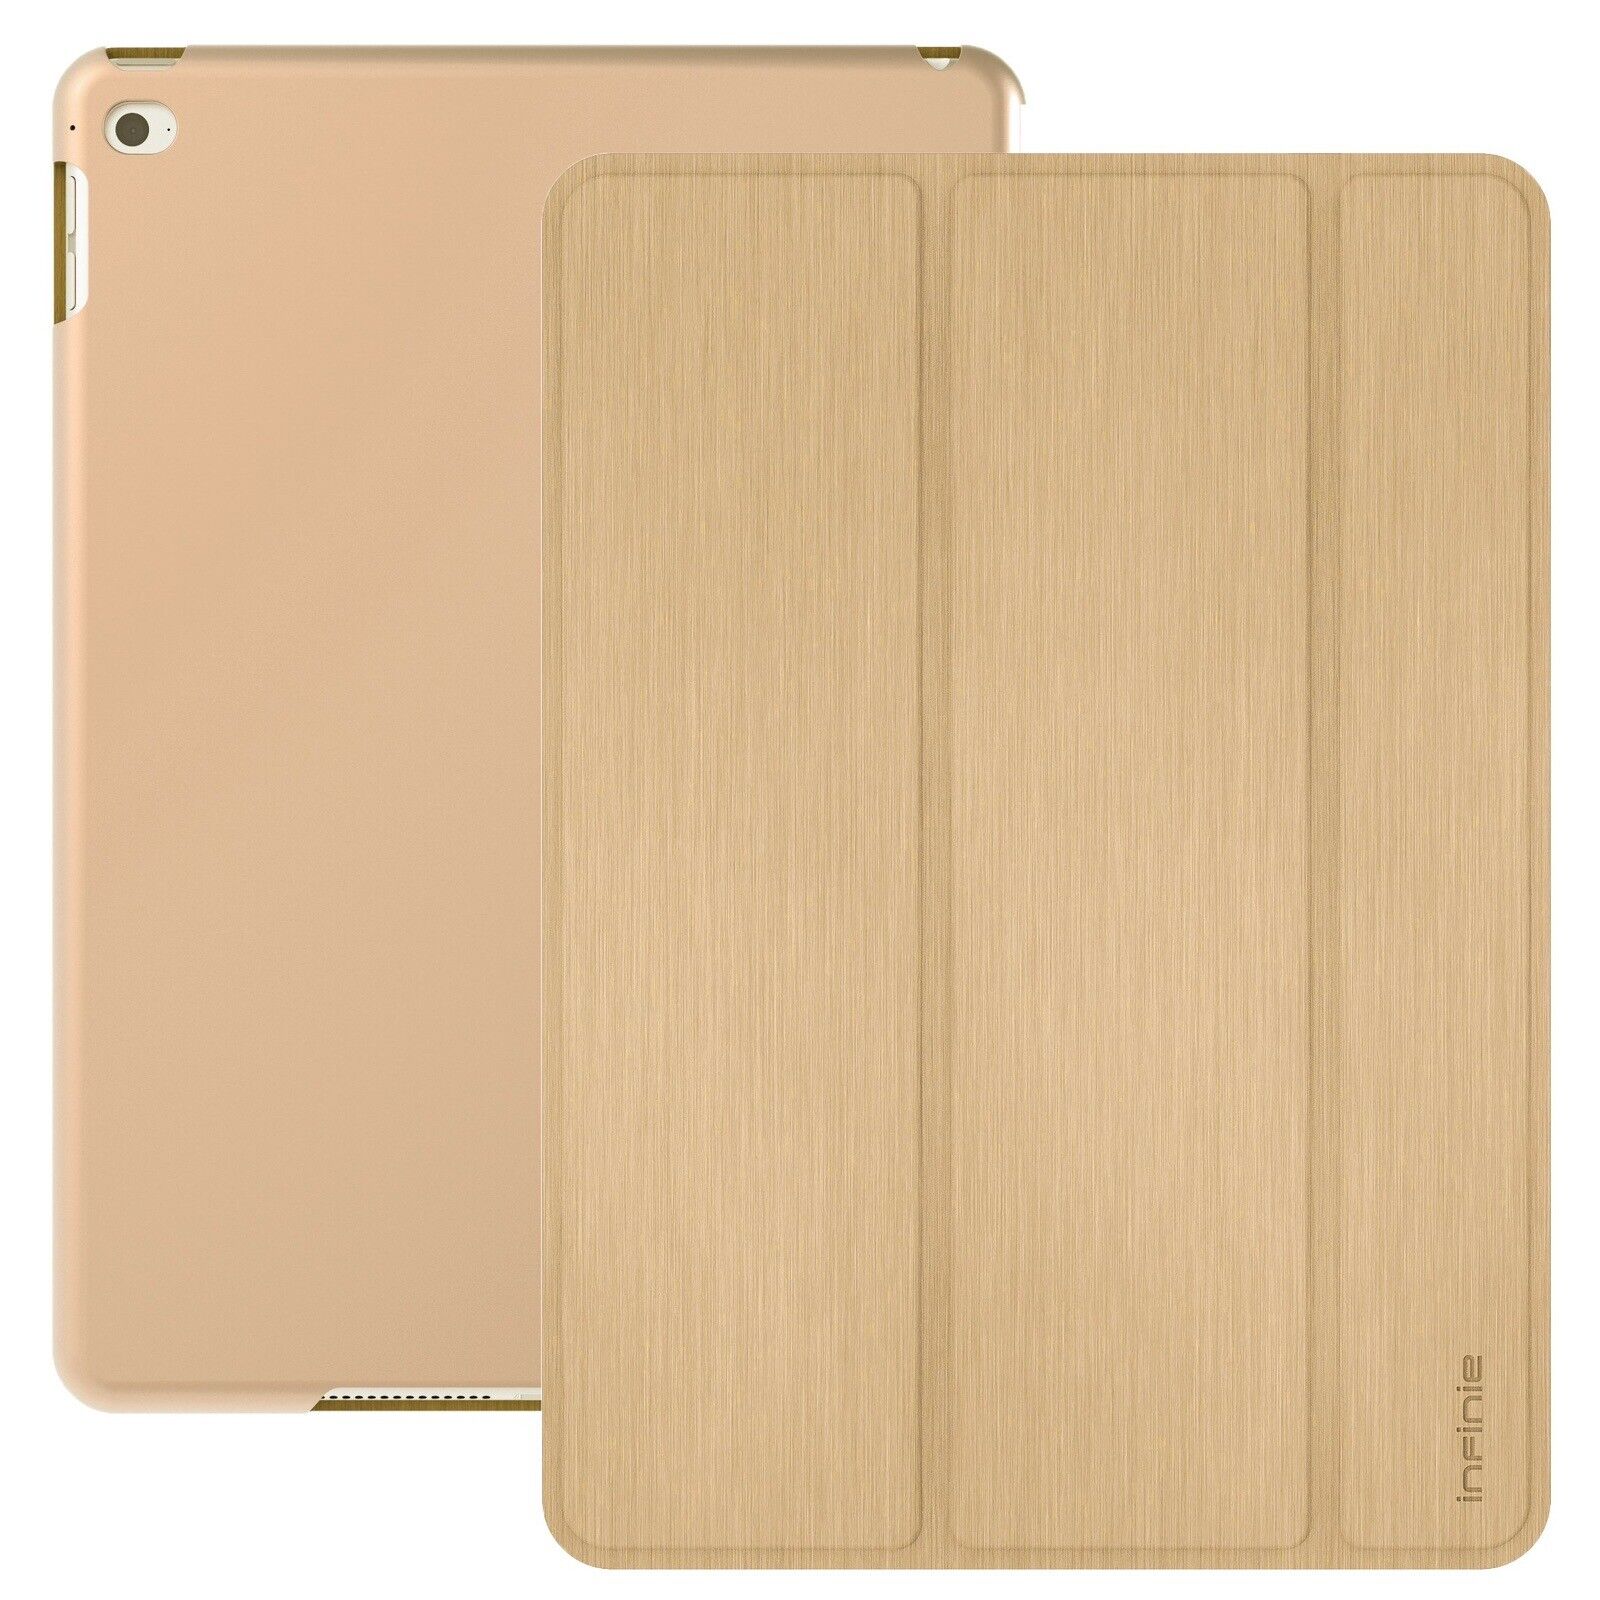 Infinie Bookcase iPad Air 2 Sleep Wake Case | Gold | Protective PU Leather |